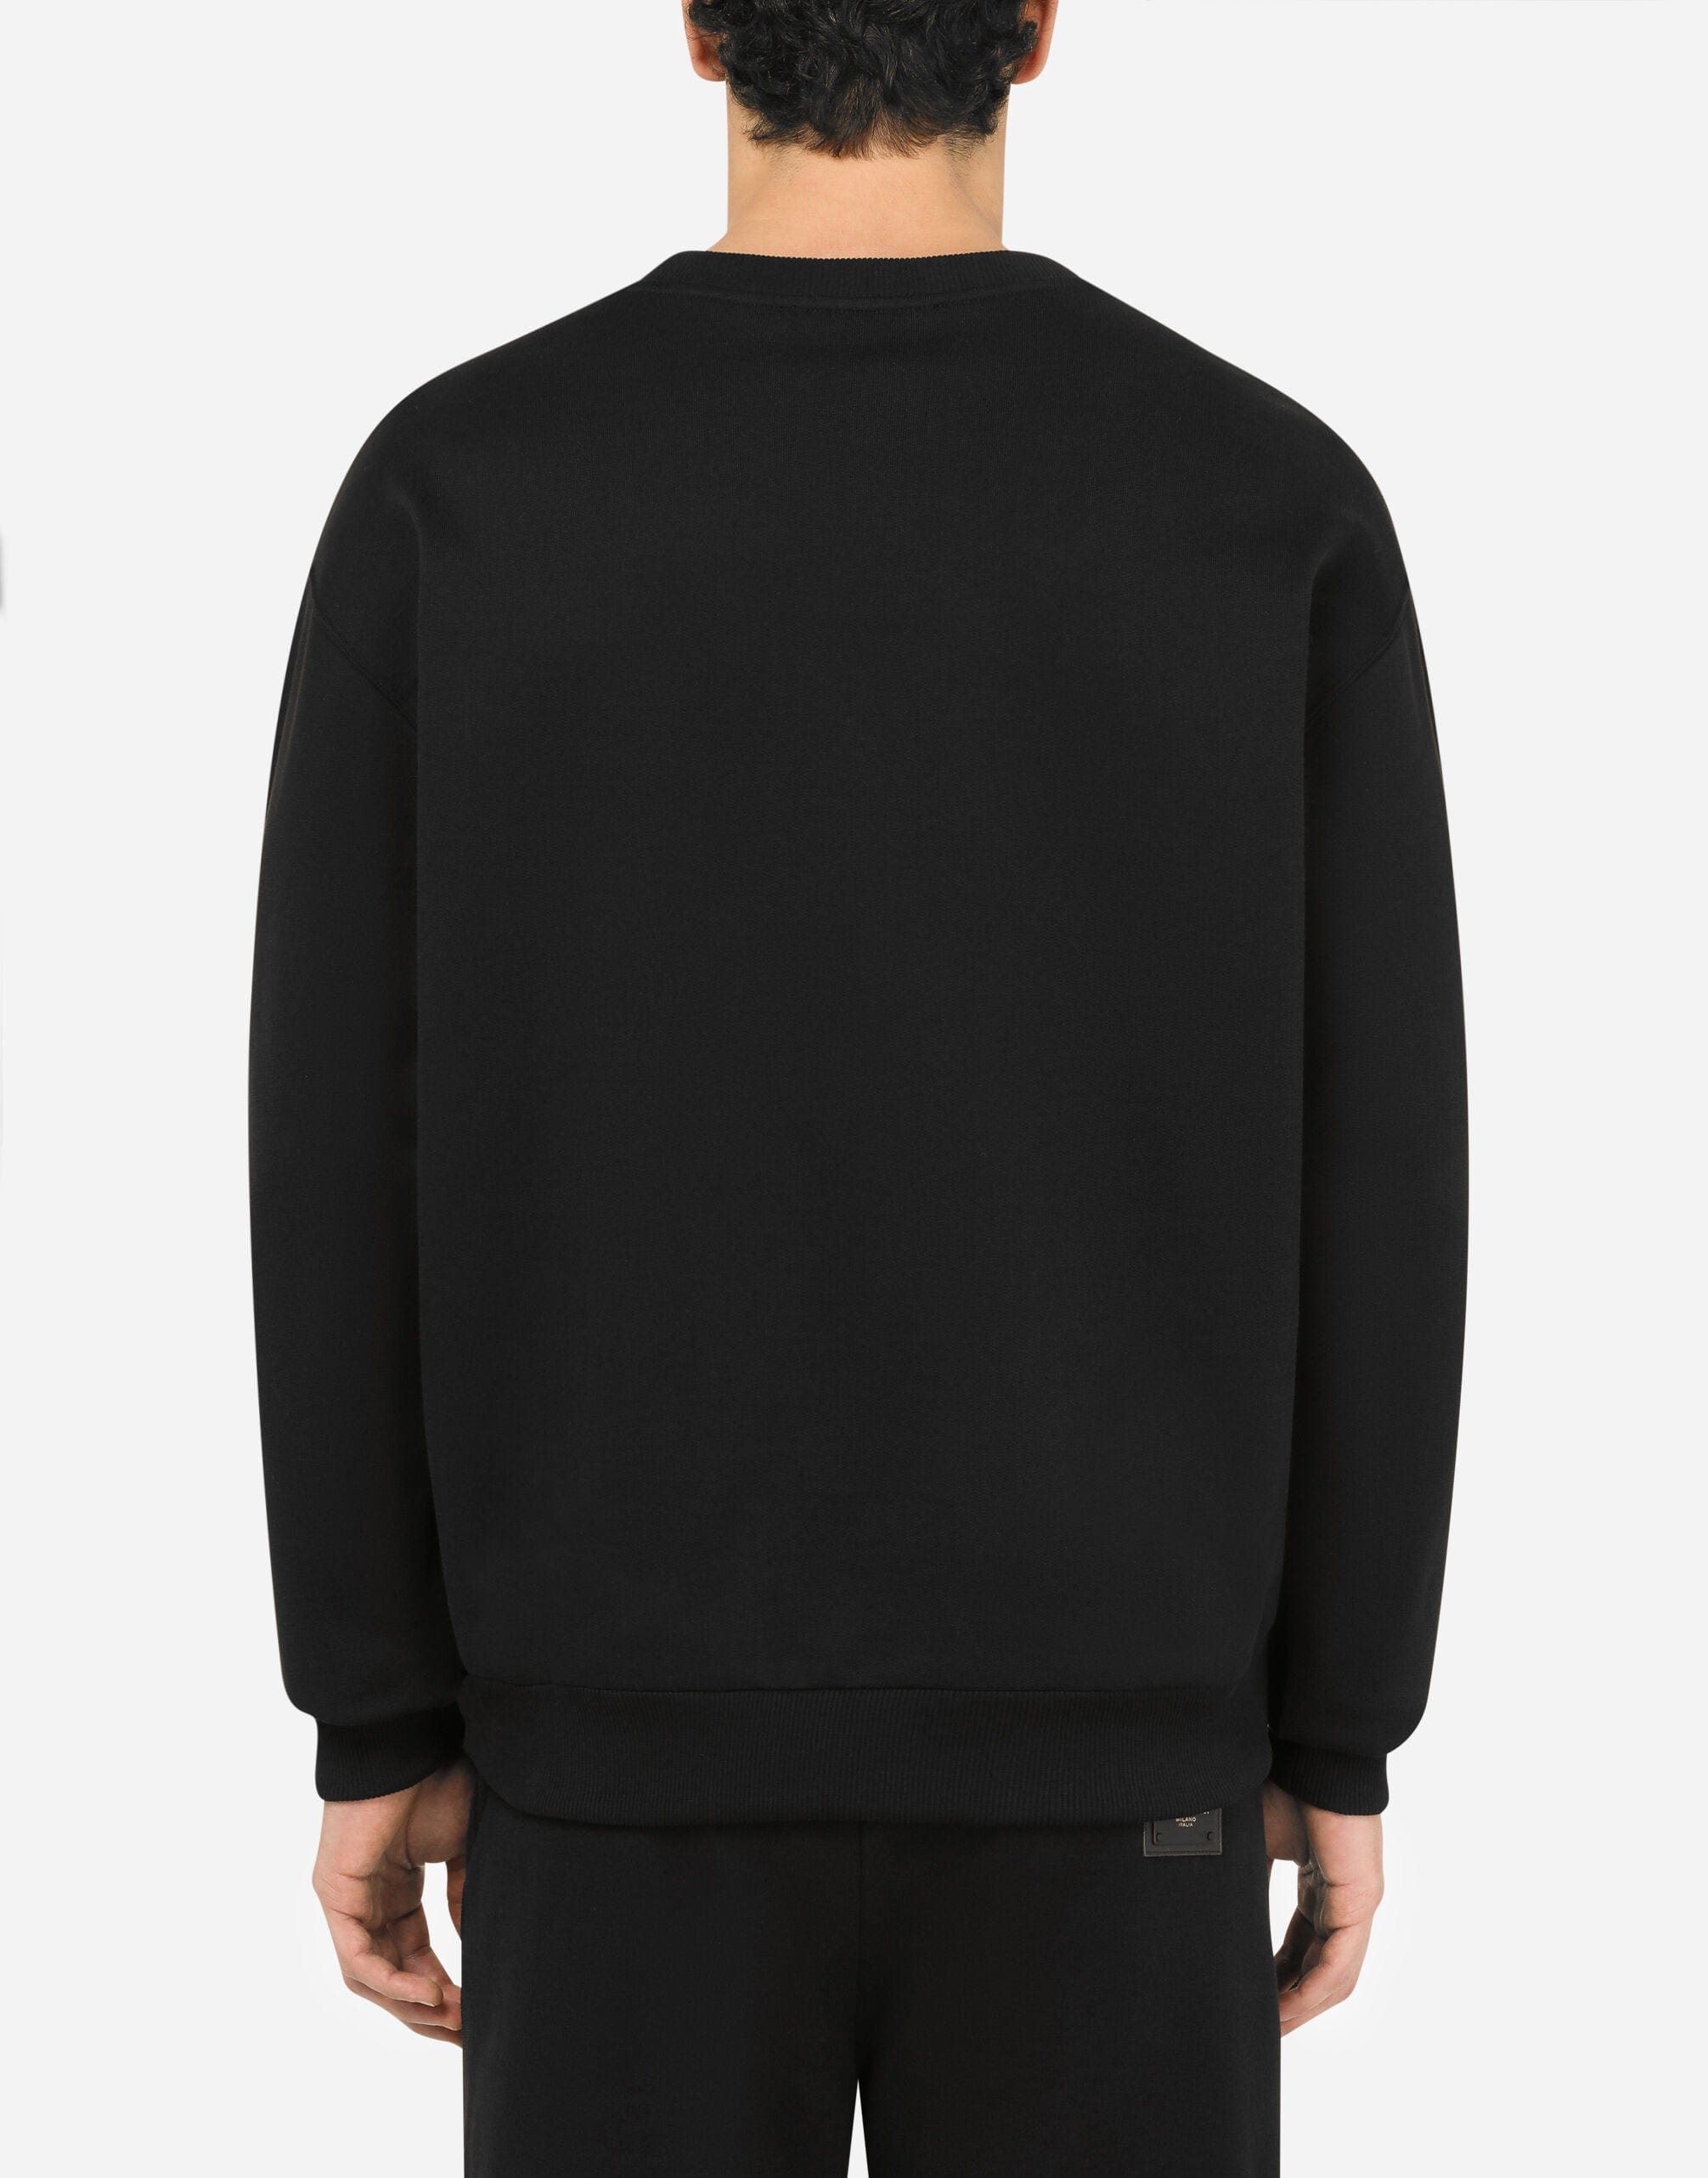 Dolce & Gabbana Jersey Sweatshirt With DG Patch